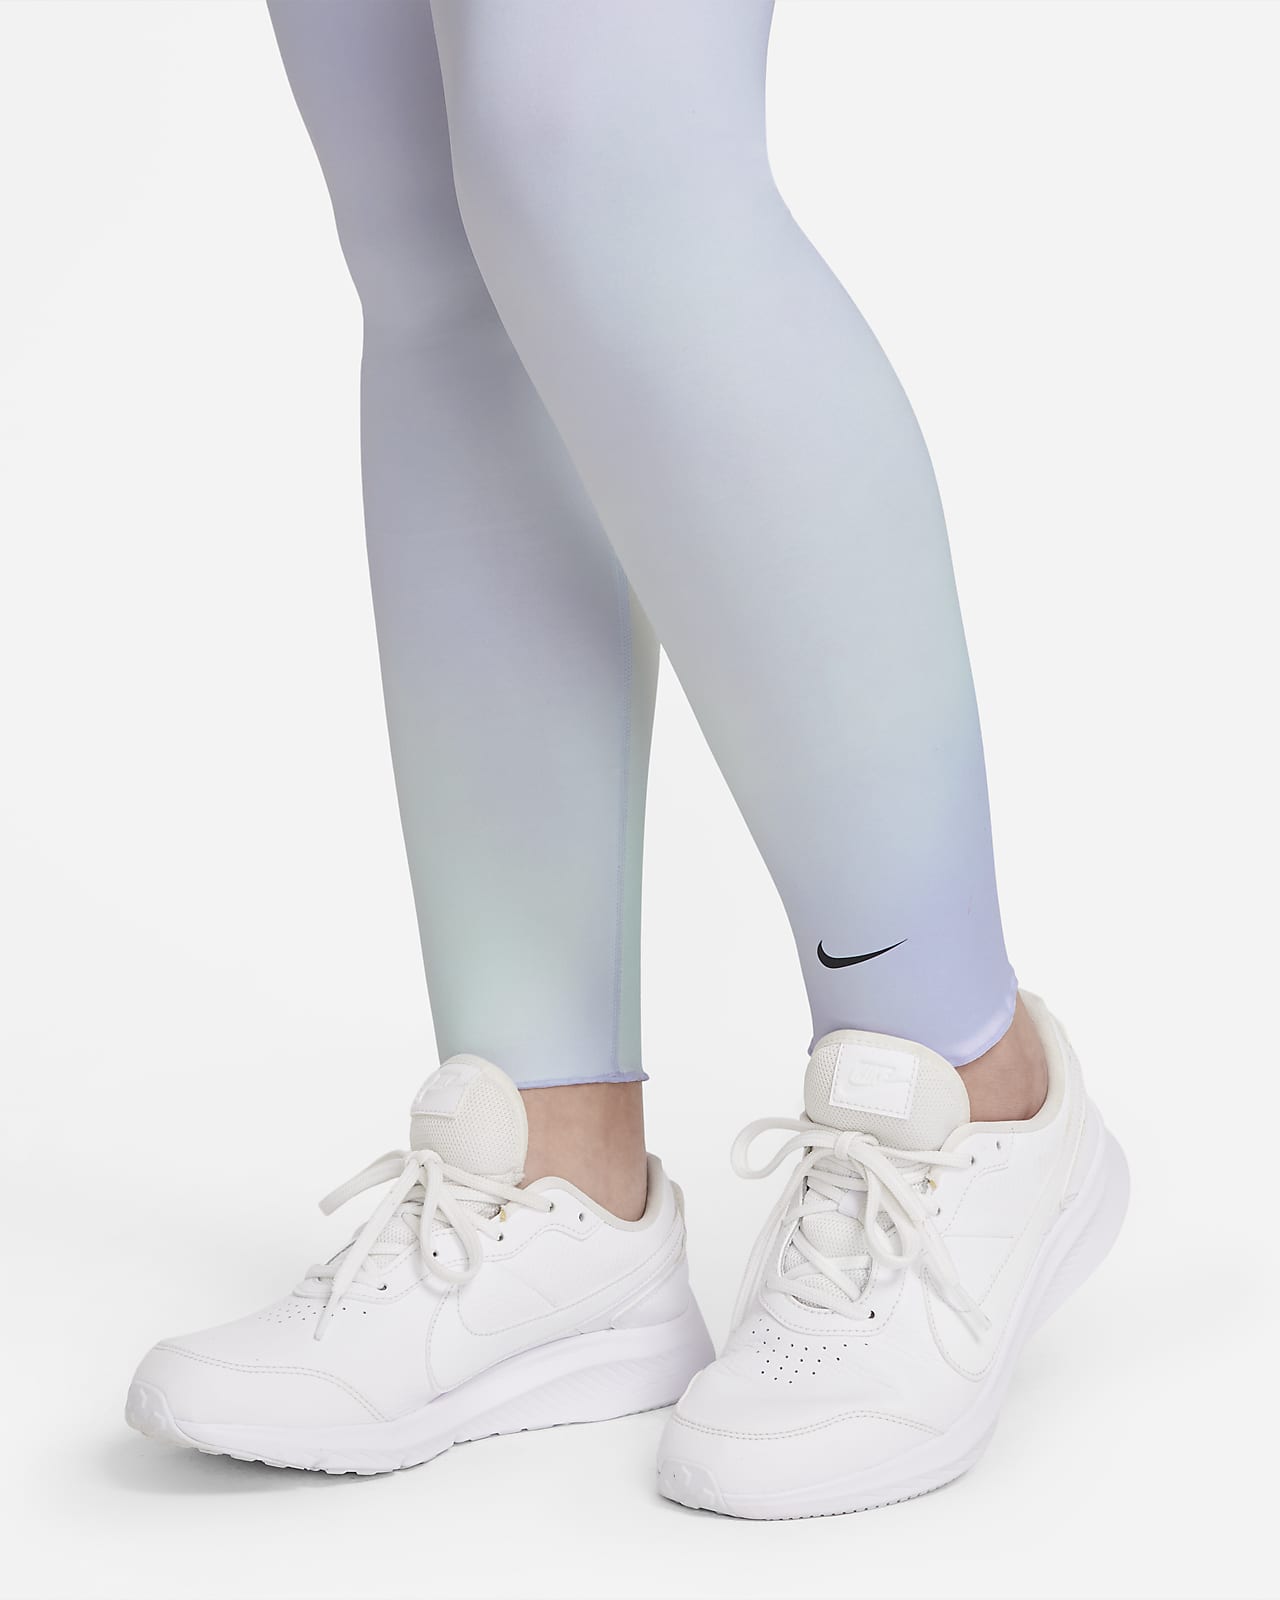 Nike KIDS AIR JORDAN Stretch Cotton Printed Leggings girls